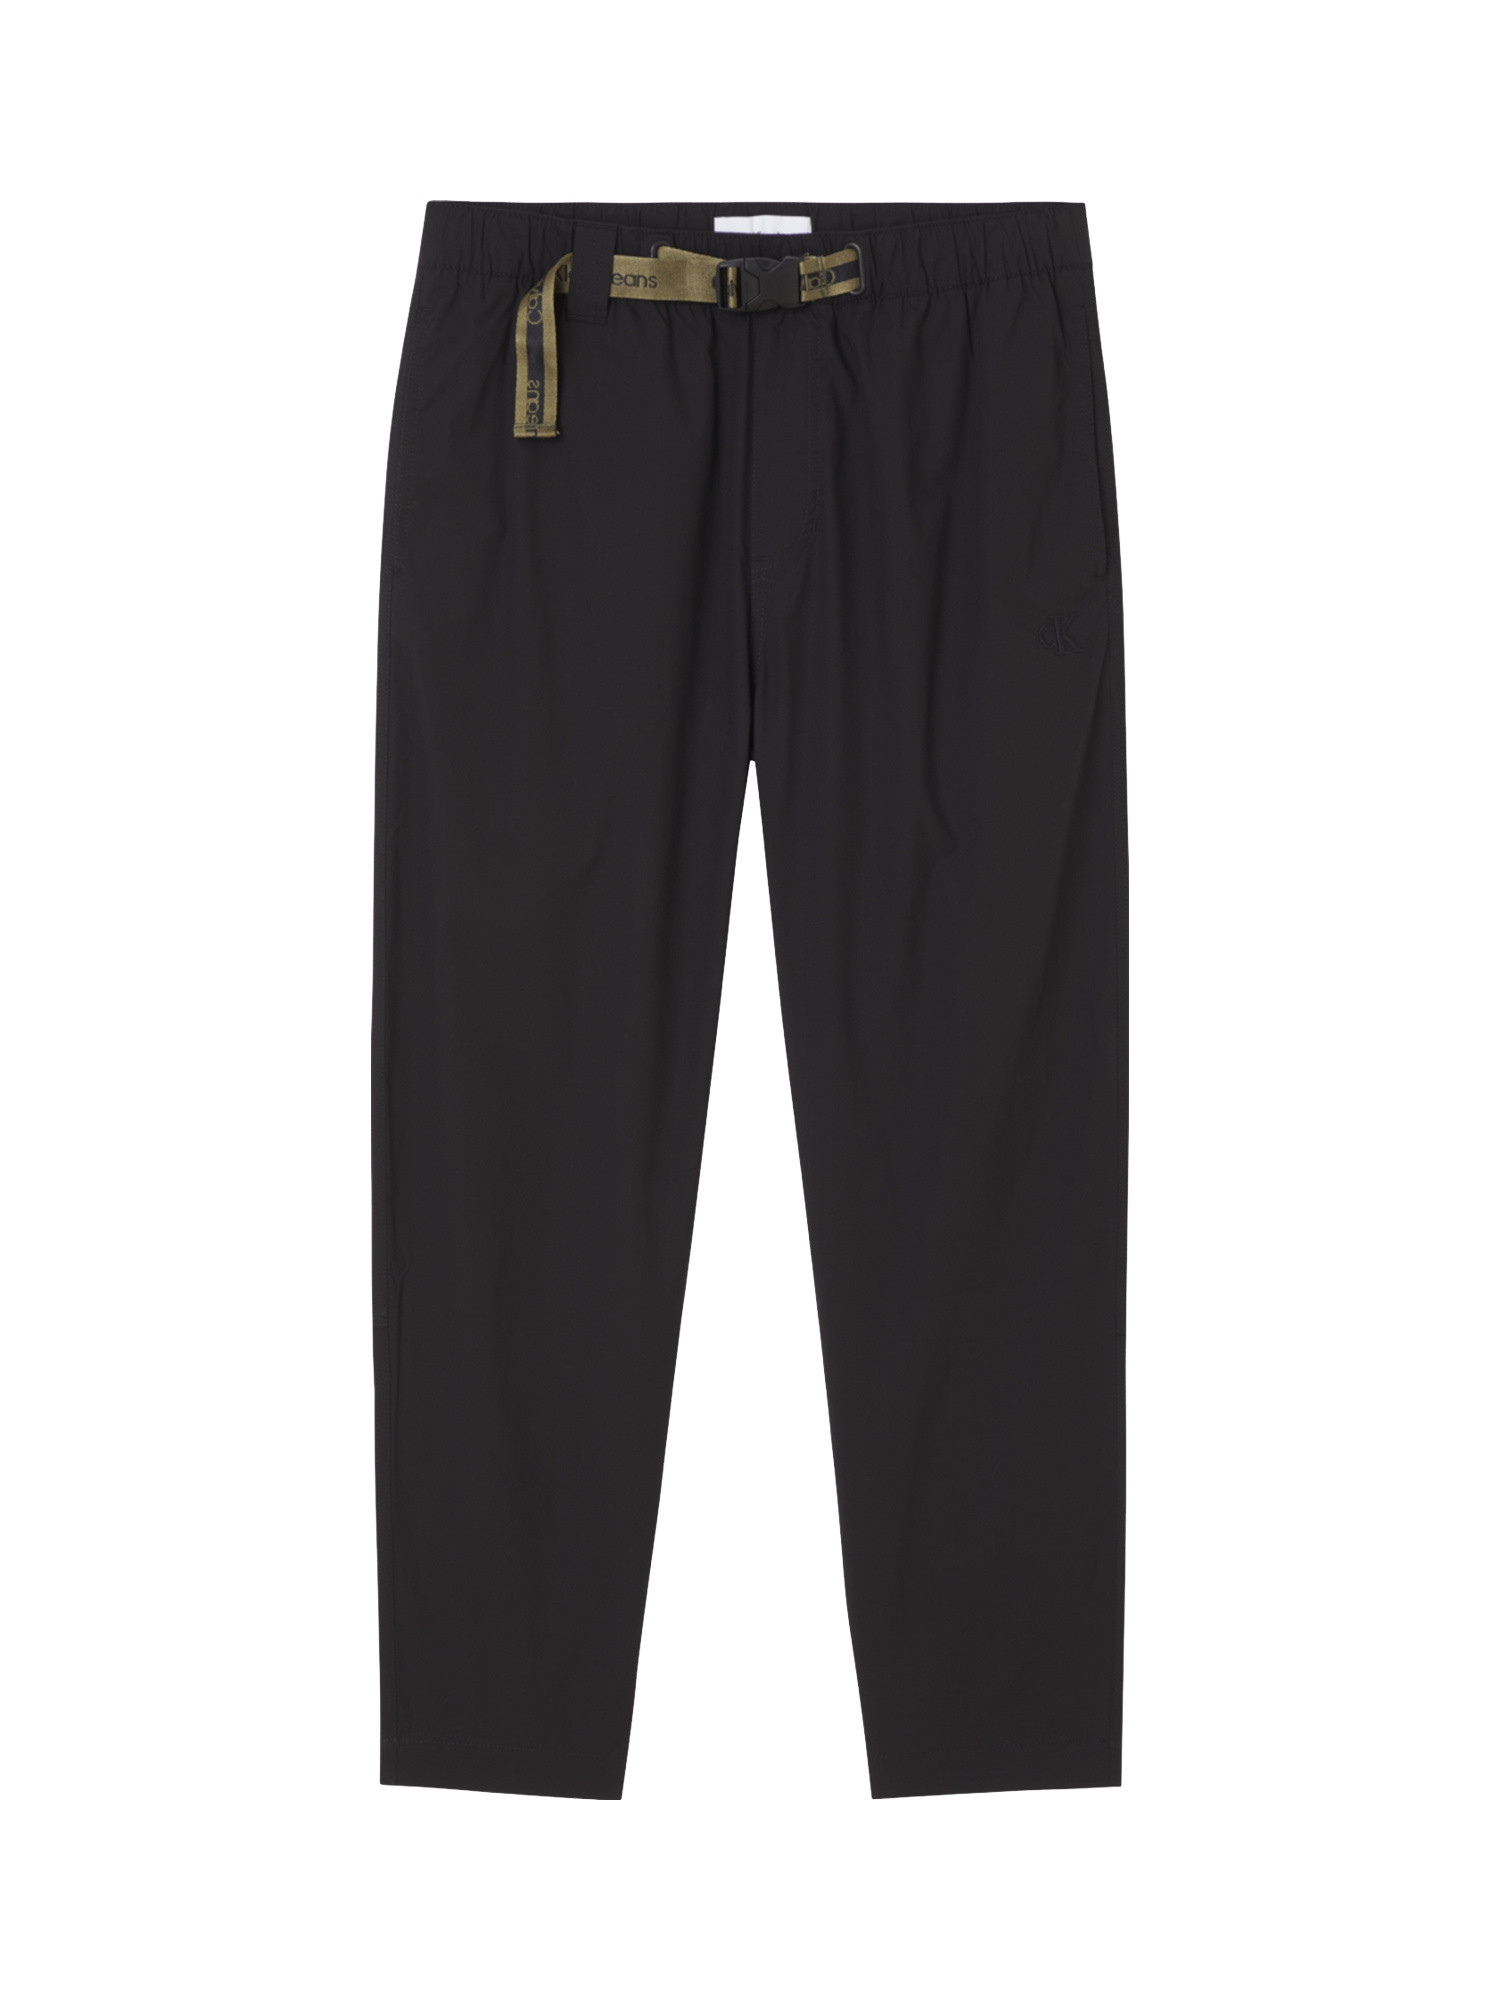 Pantalone con cintura, Nero, large